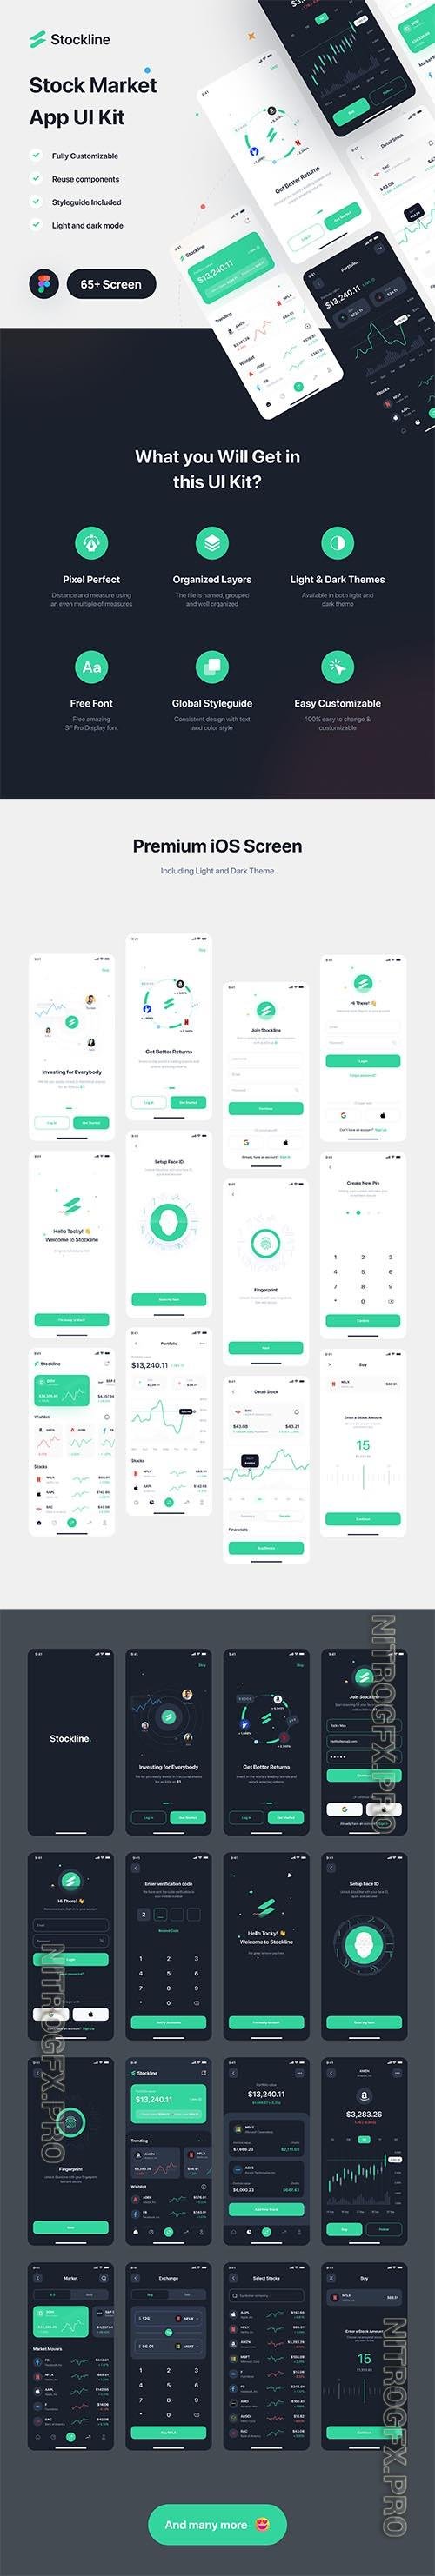 UI8 - Stockline - Stock Market App UI Kit